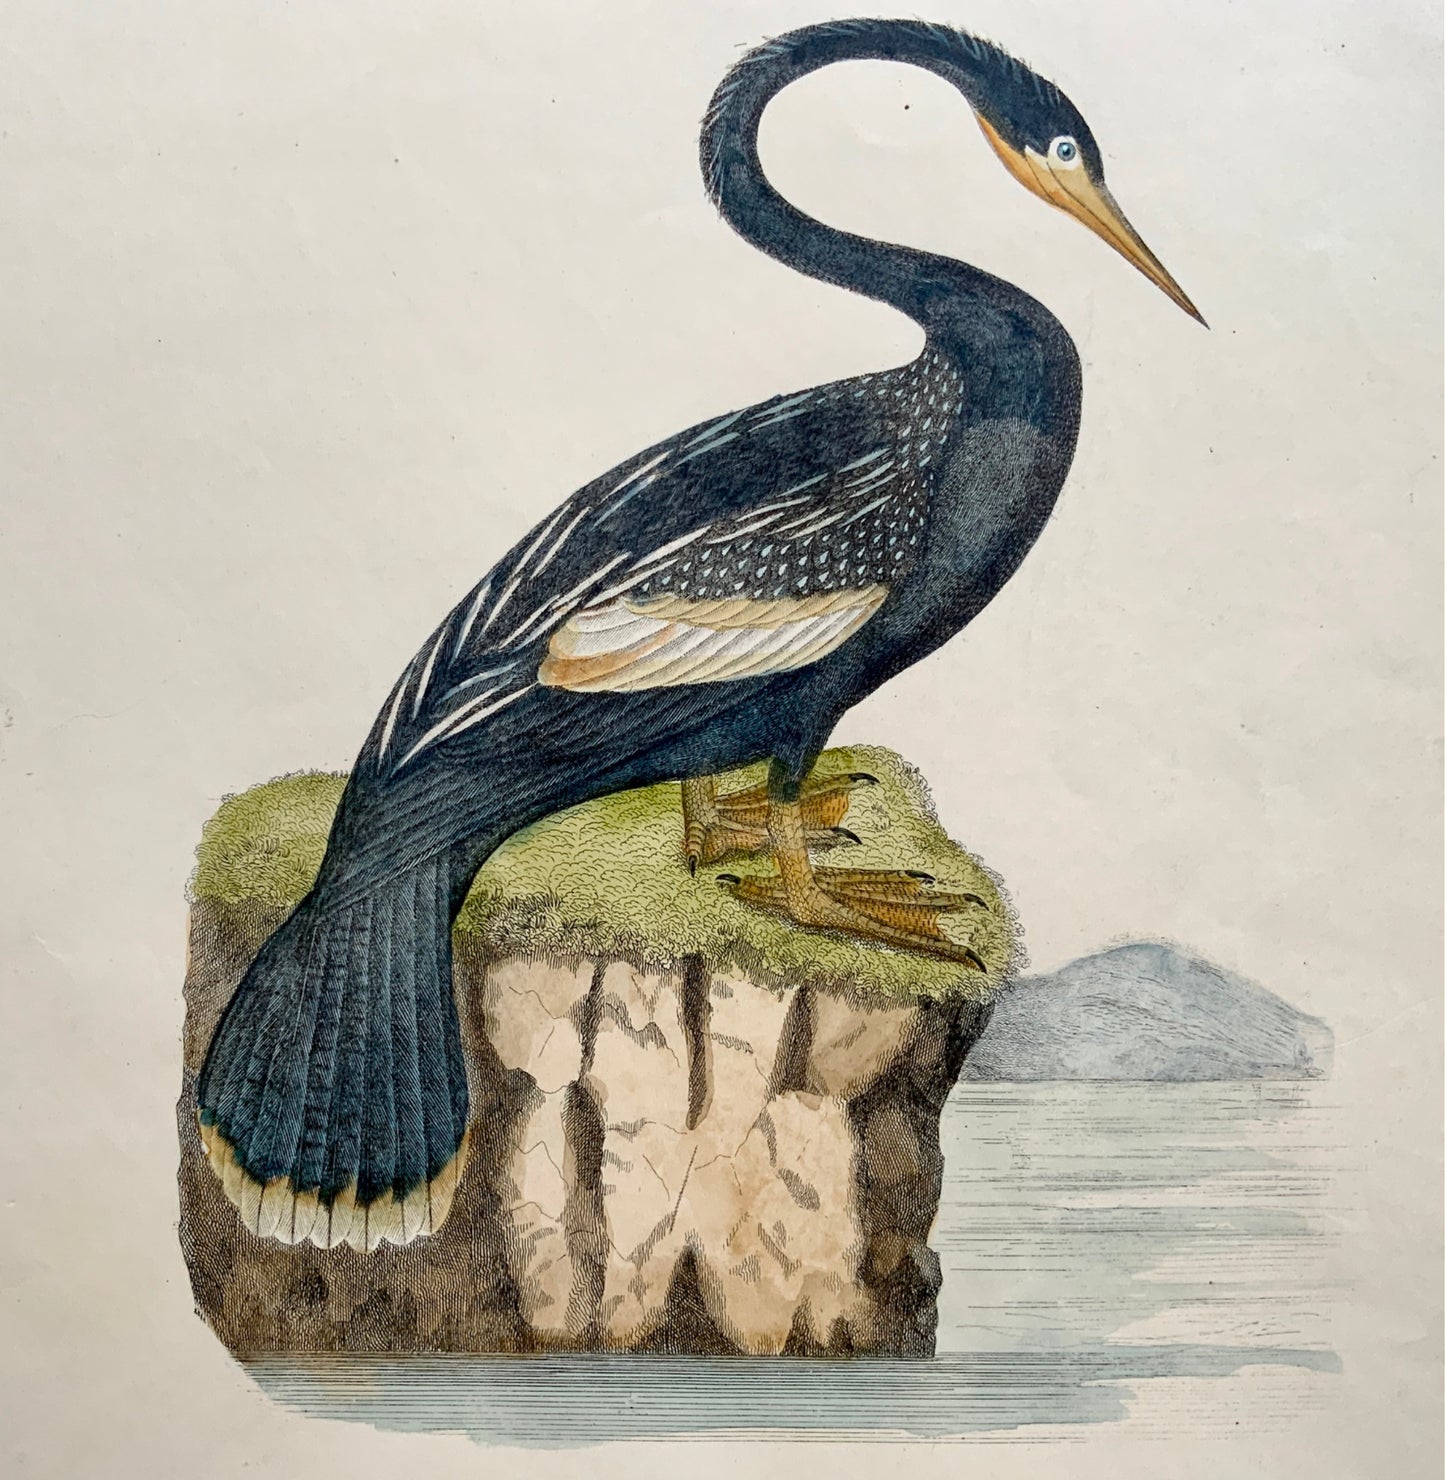 1846 DARTER Black Billed Ornithology - Brown hand coloured Large Folio (36cm)